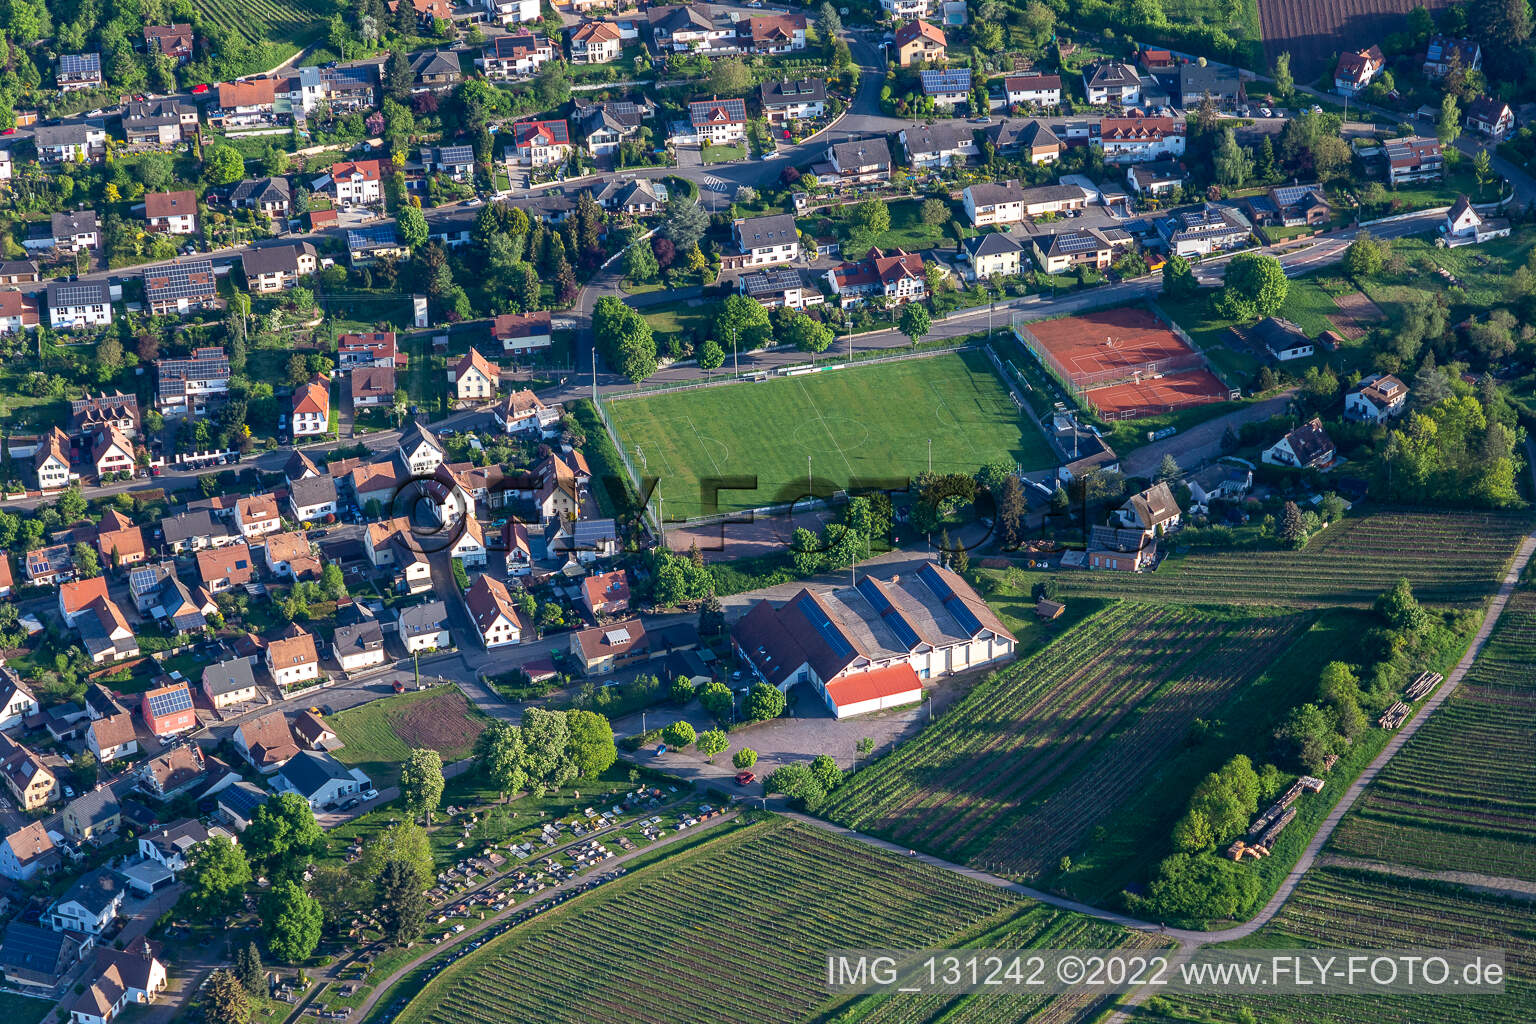 Vue aérienne de TuS Albersweiler 1982 eV et Löwensteinhalle à Albersweiler dans le département Rhénanie-Palatinat, Allemagne